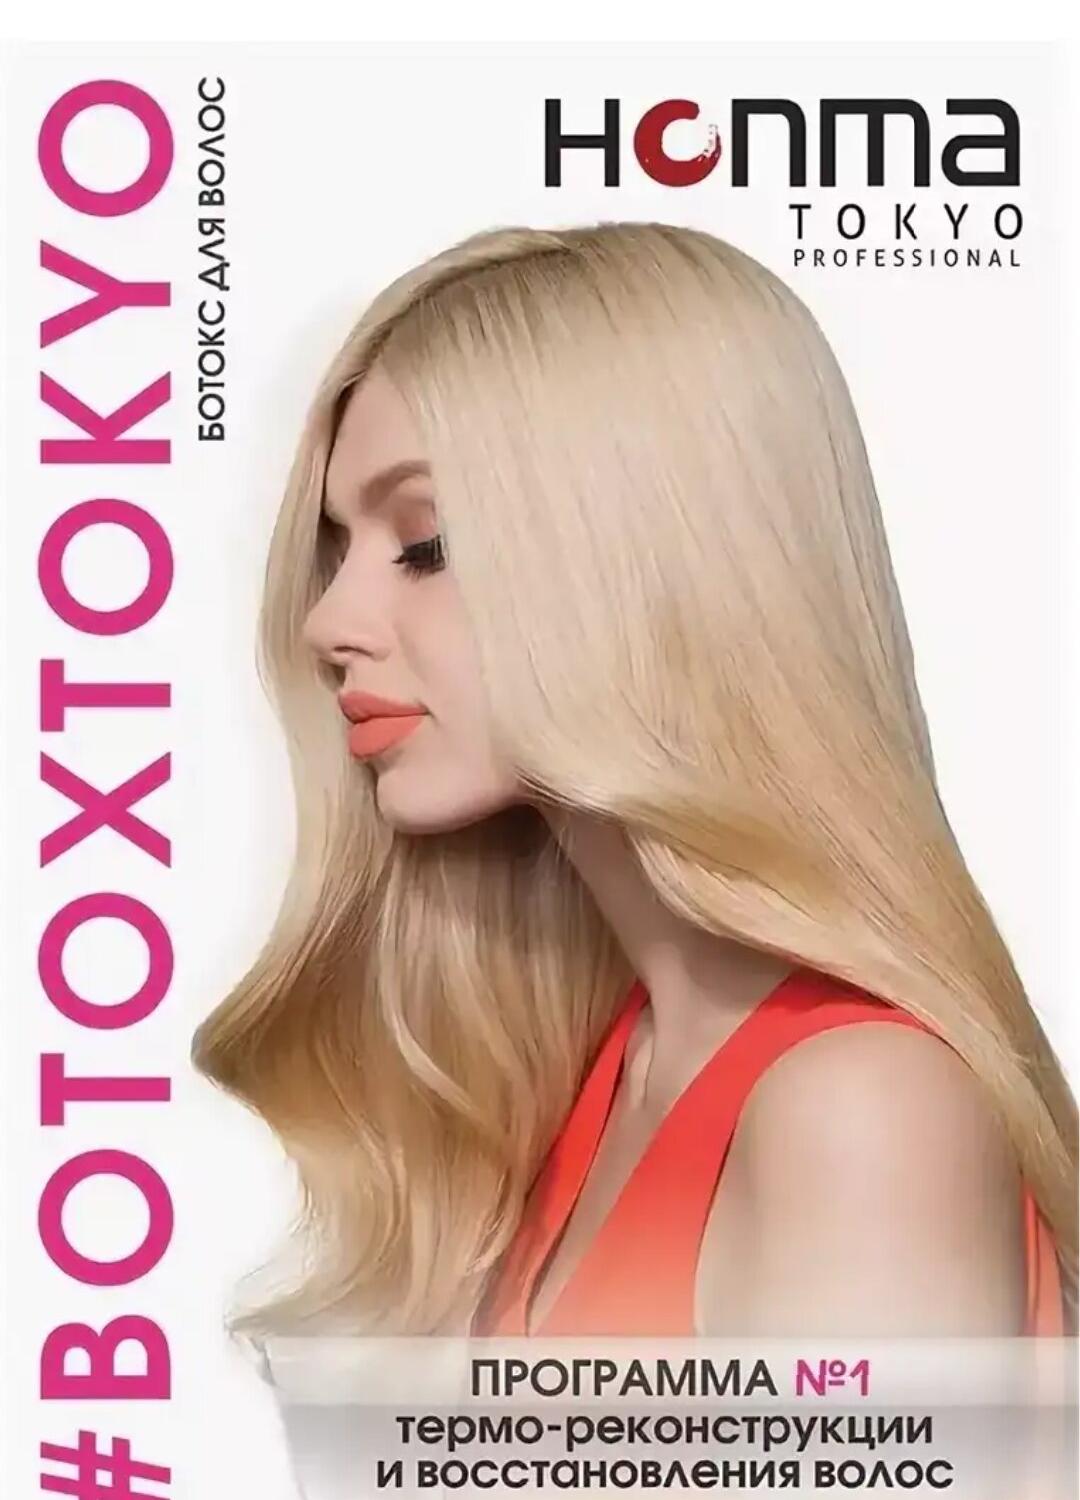 Honma Tokyo реклама